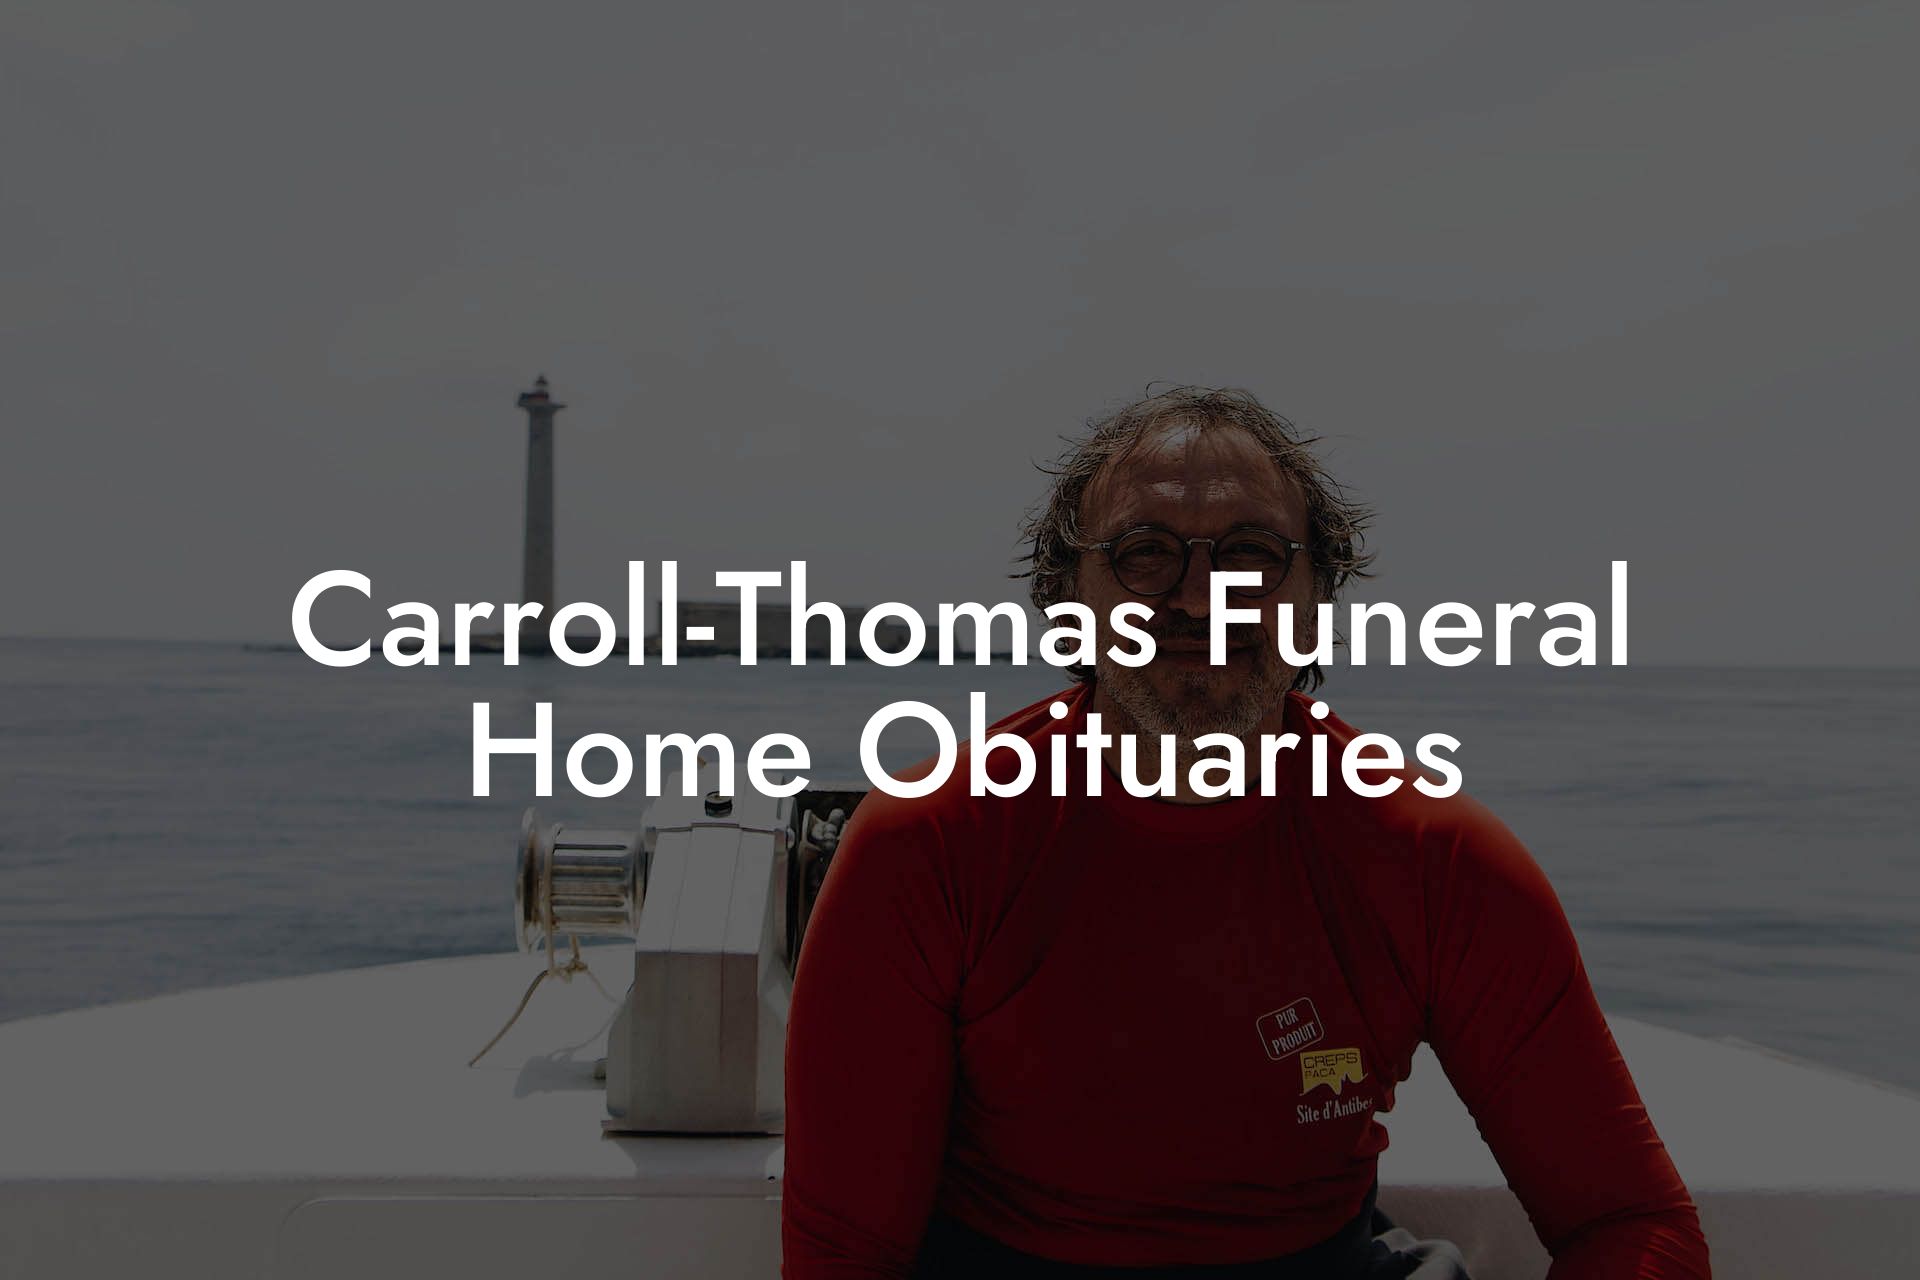 Carroll-Thomas Funeral Home Obituaries